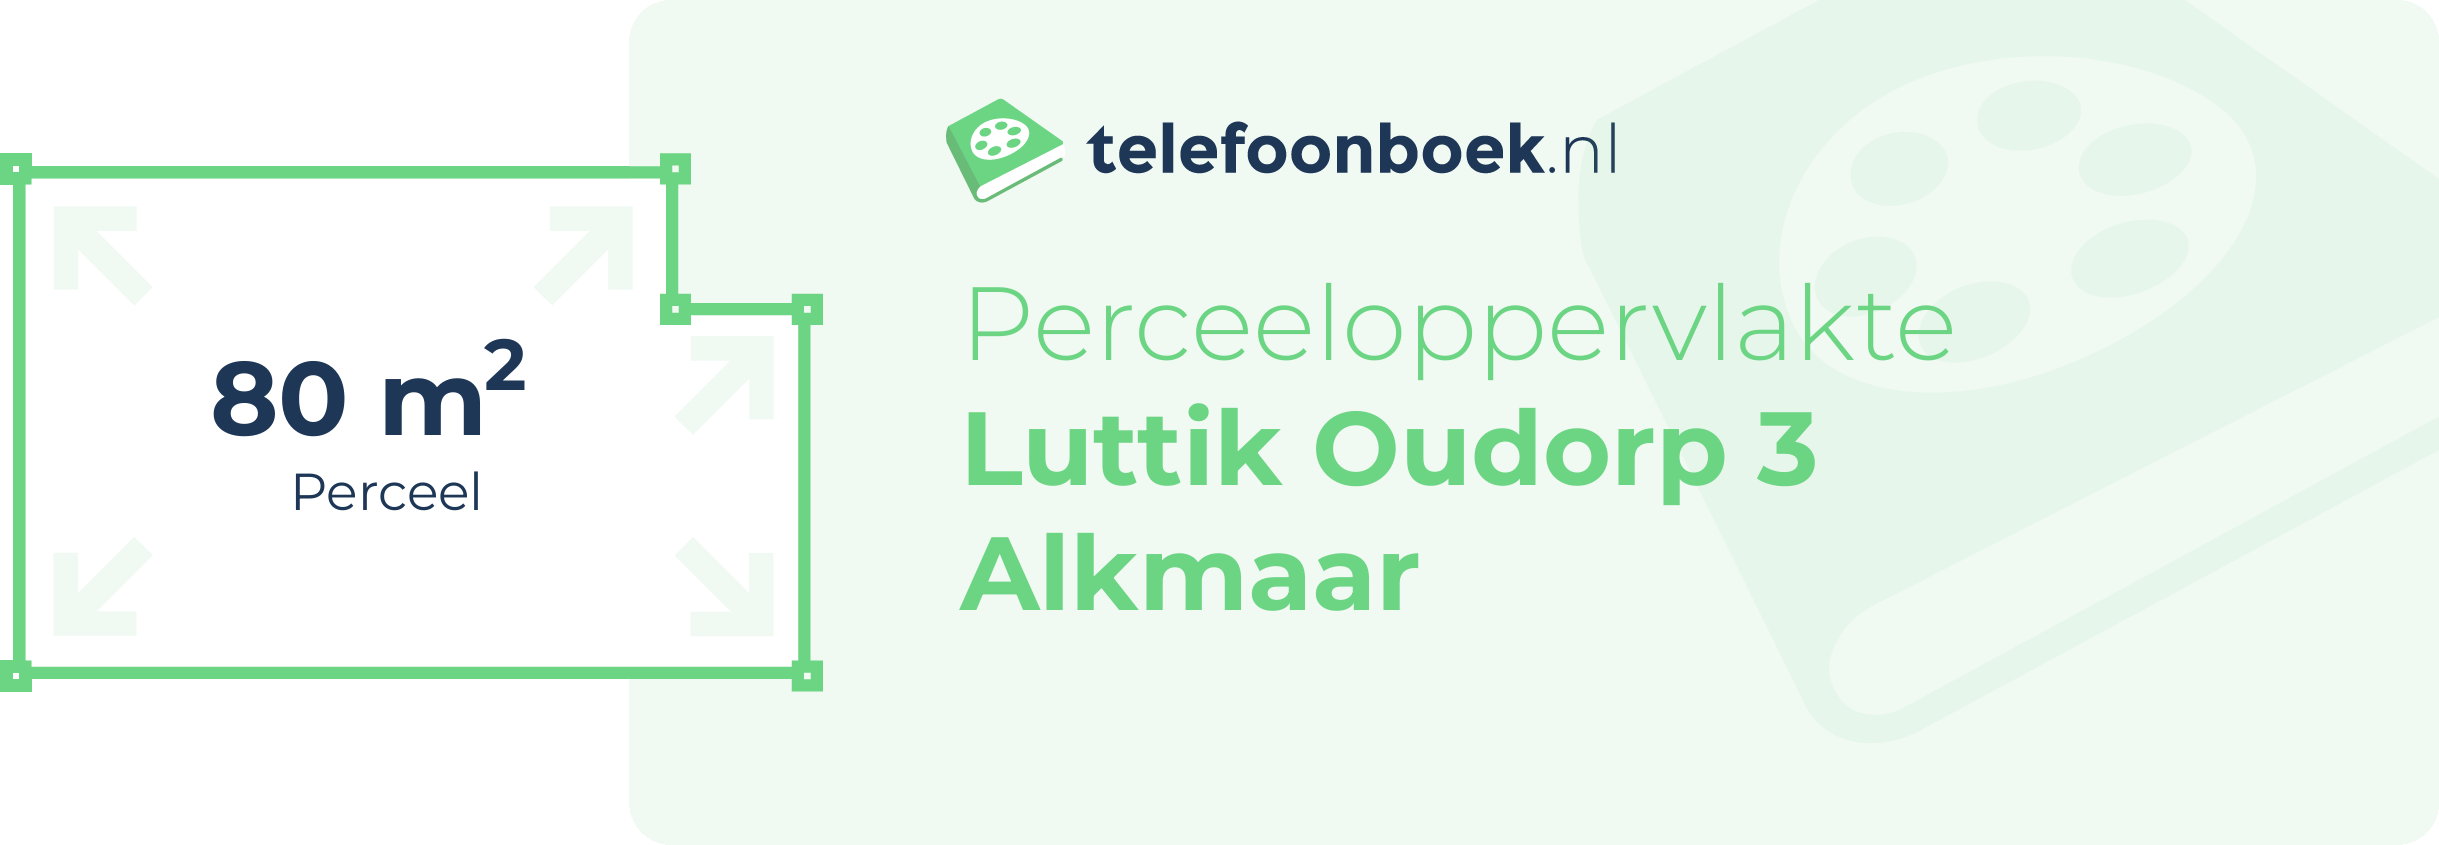 Perceeloppervlakte Luttik Oudorp 3 Alkmaar